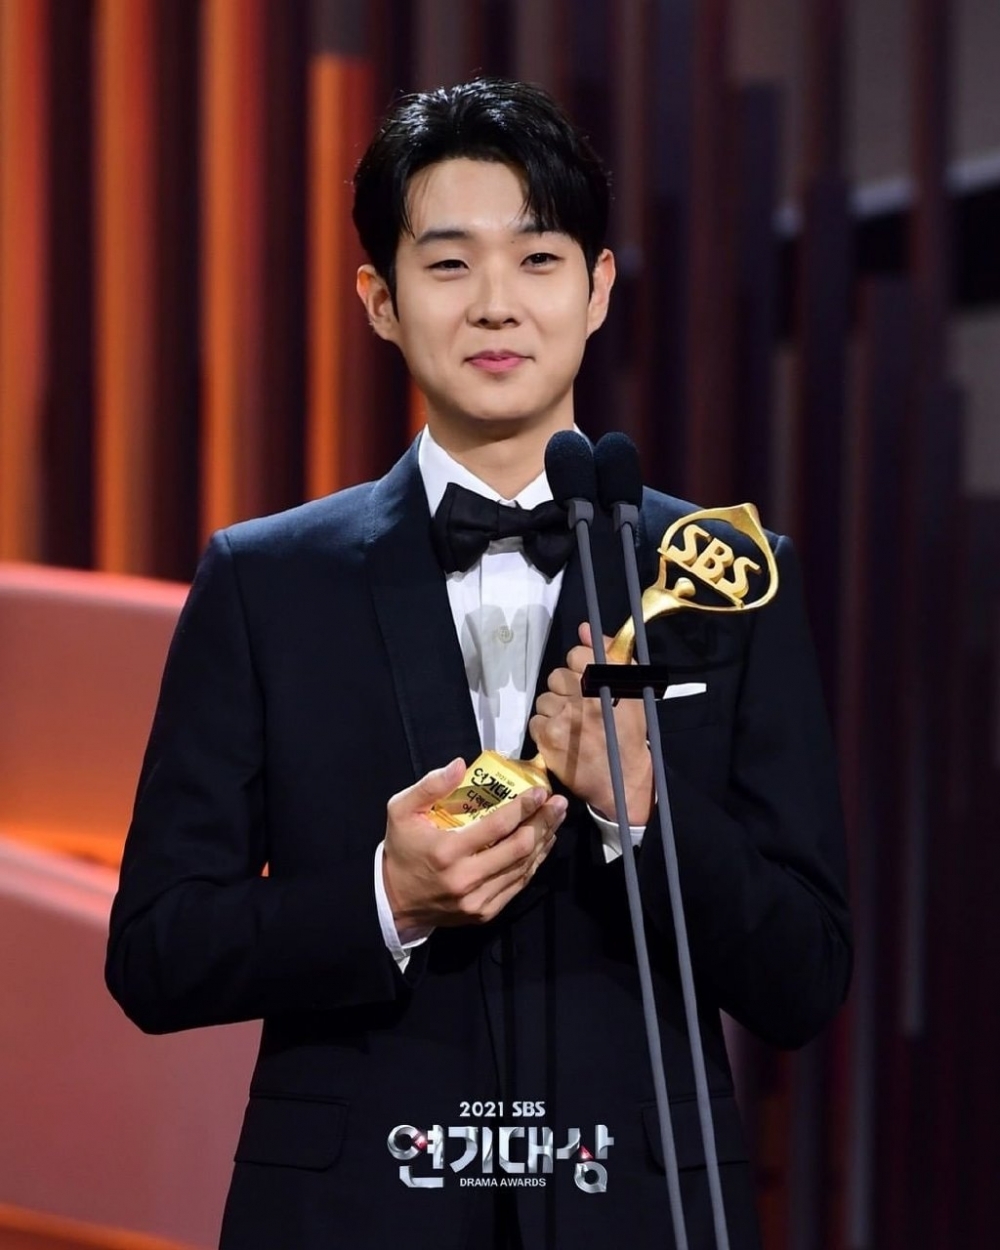 崔宇植在《SBS演技大賞》拿下「Director's Awards」獎